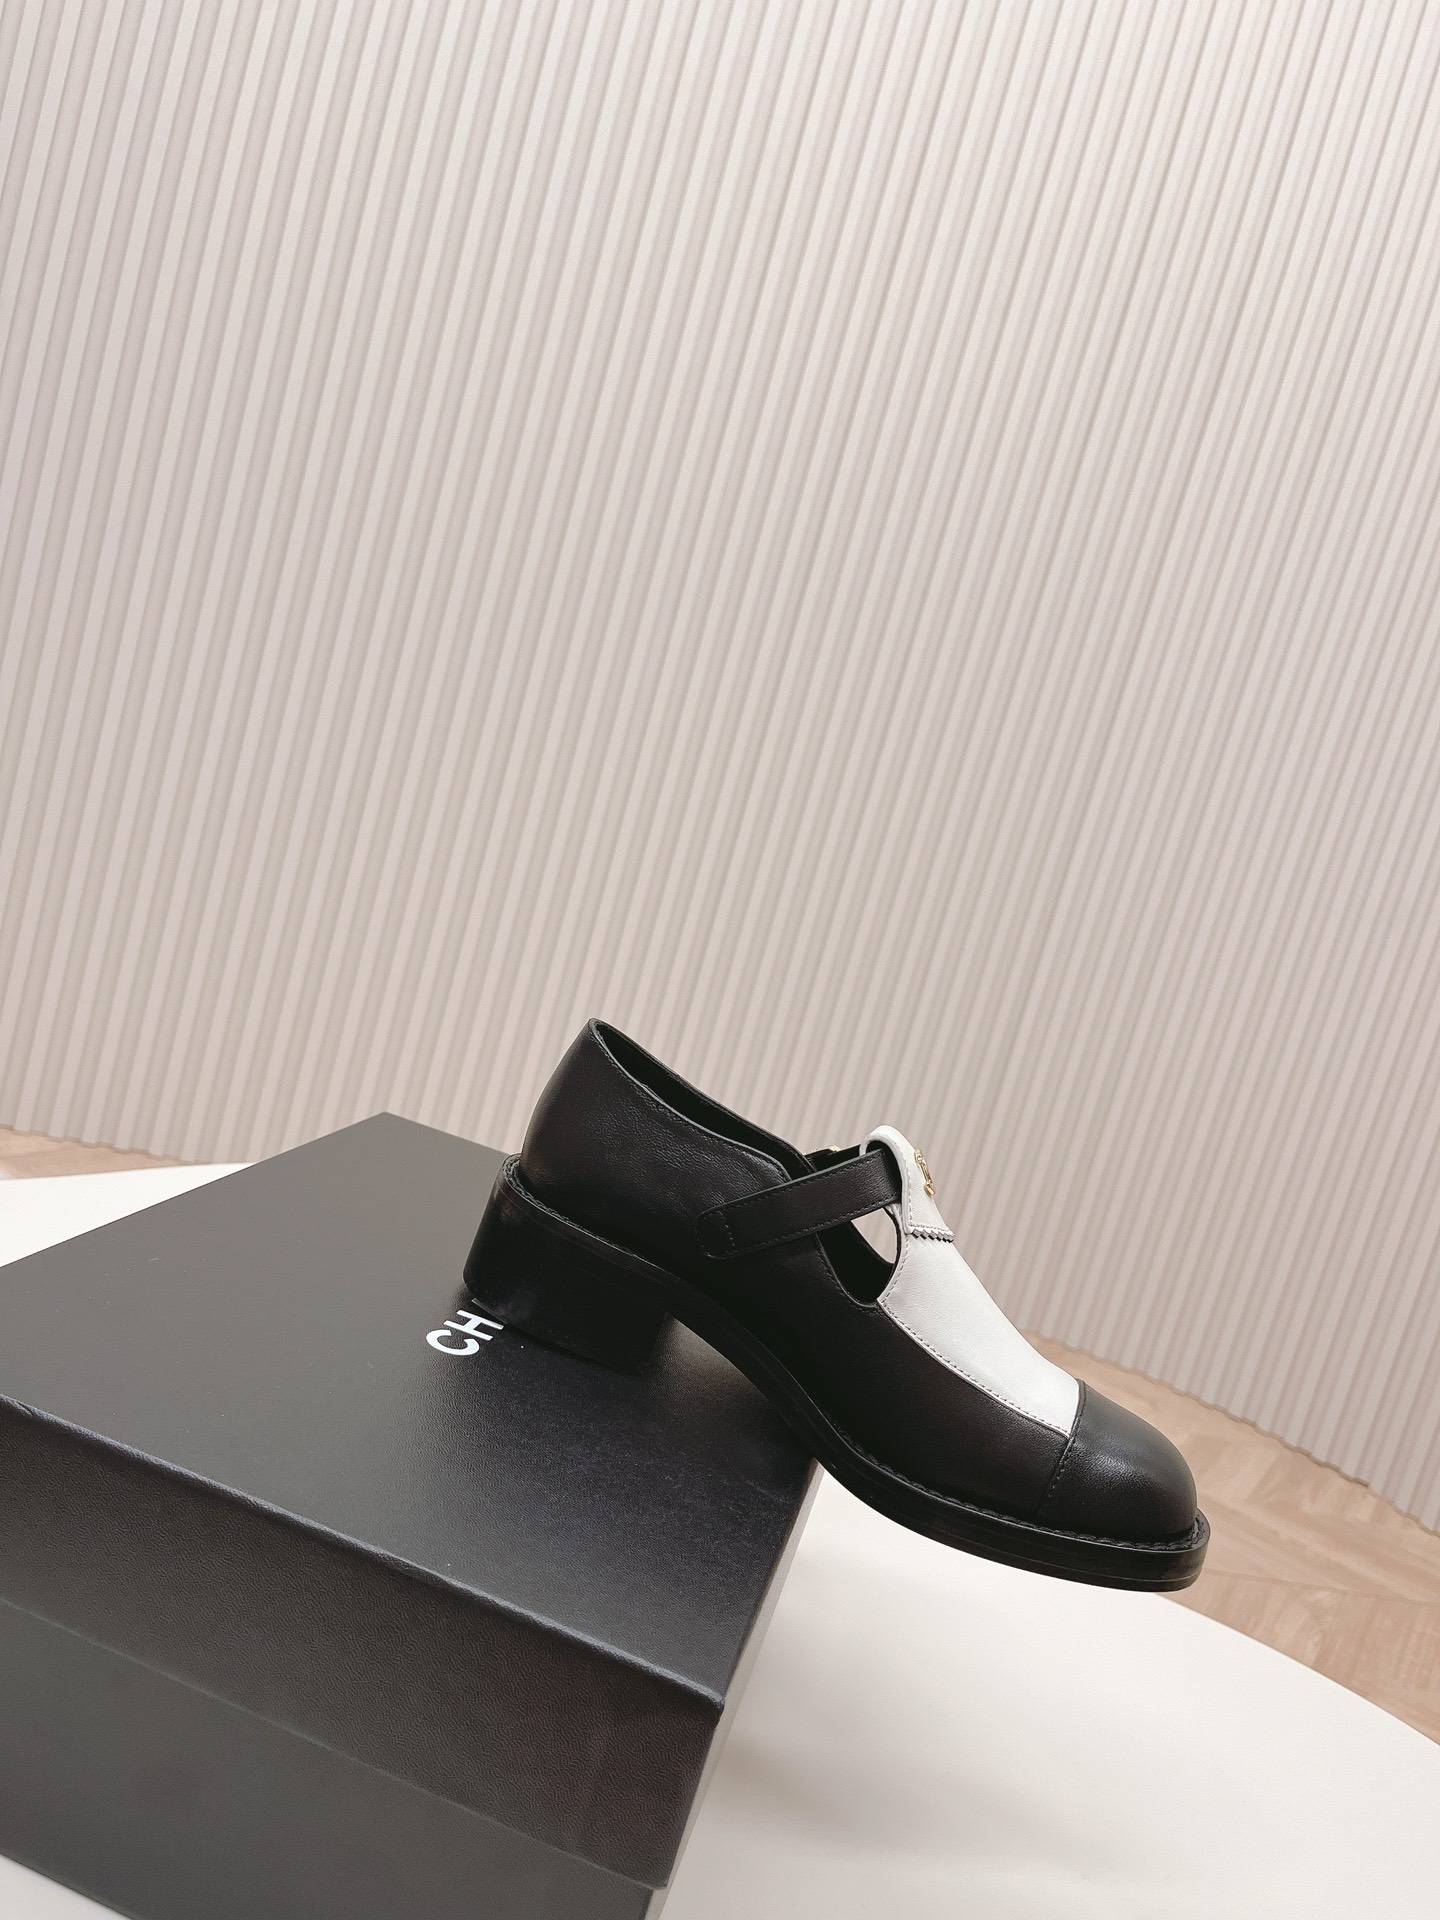 CHANELシャネルの靴激安通販 レザー ファッション ローファーシンプル 厚い靴底 歩きやすい ホワイト_5